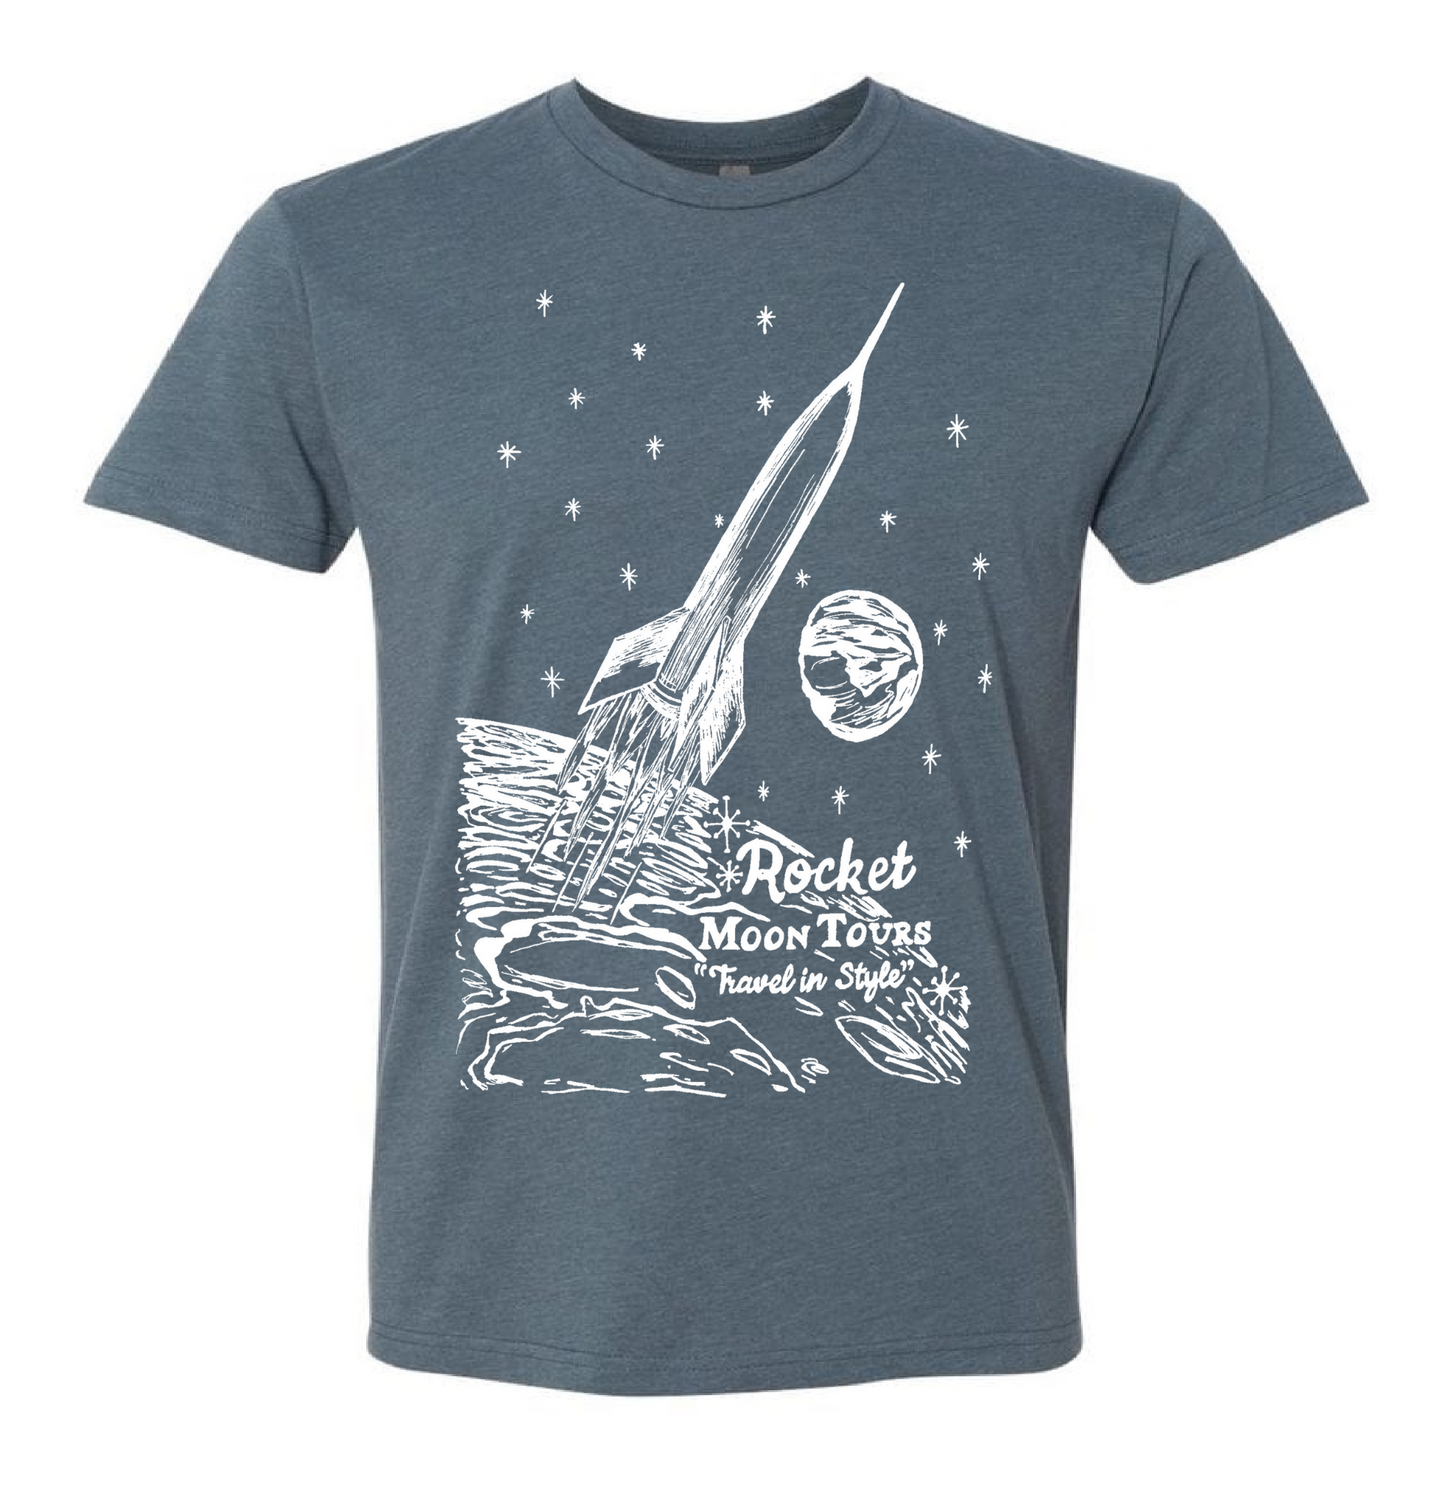 Rocket Moon Tours Unisex T Shirt